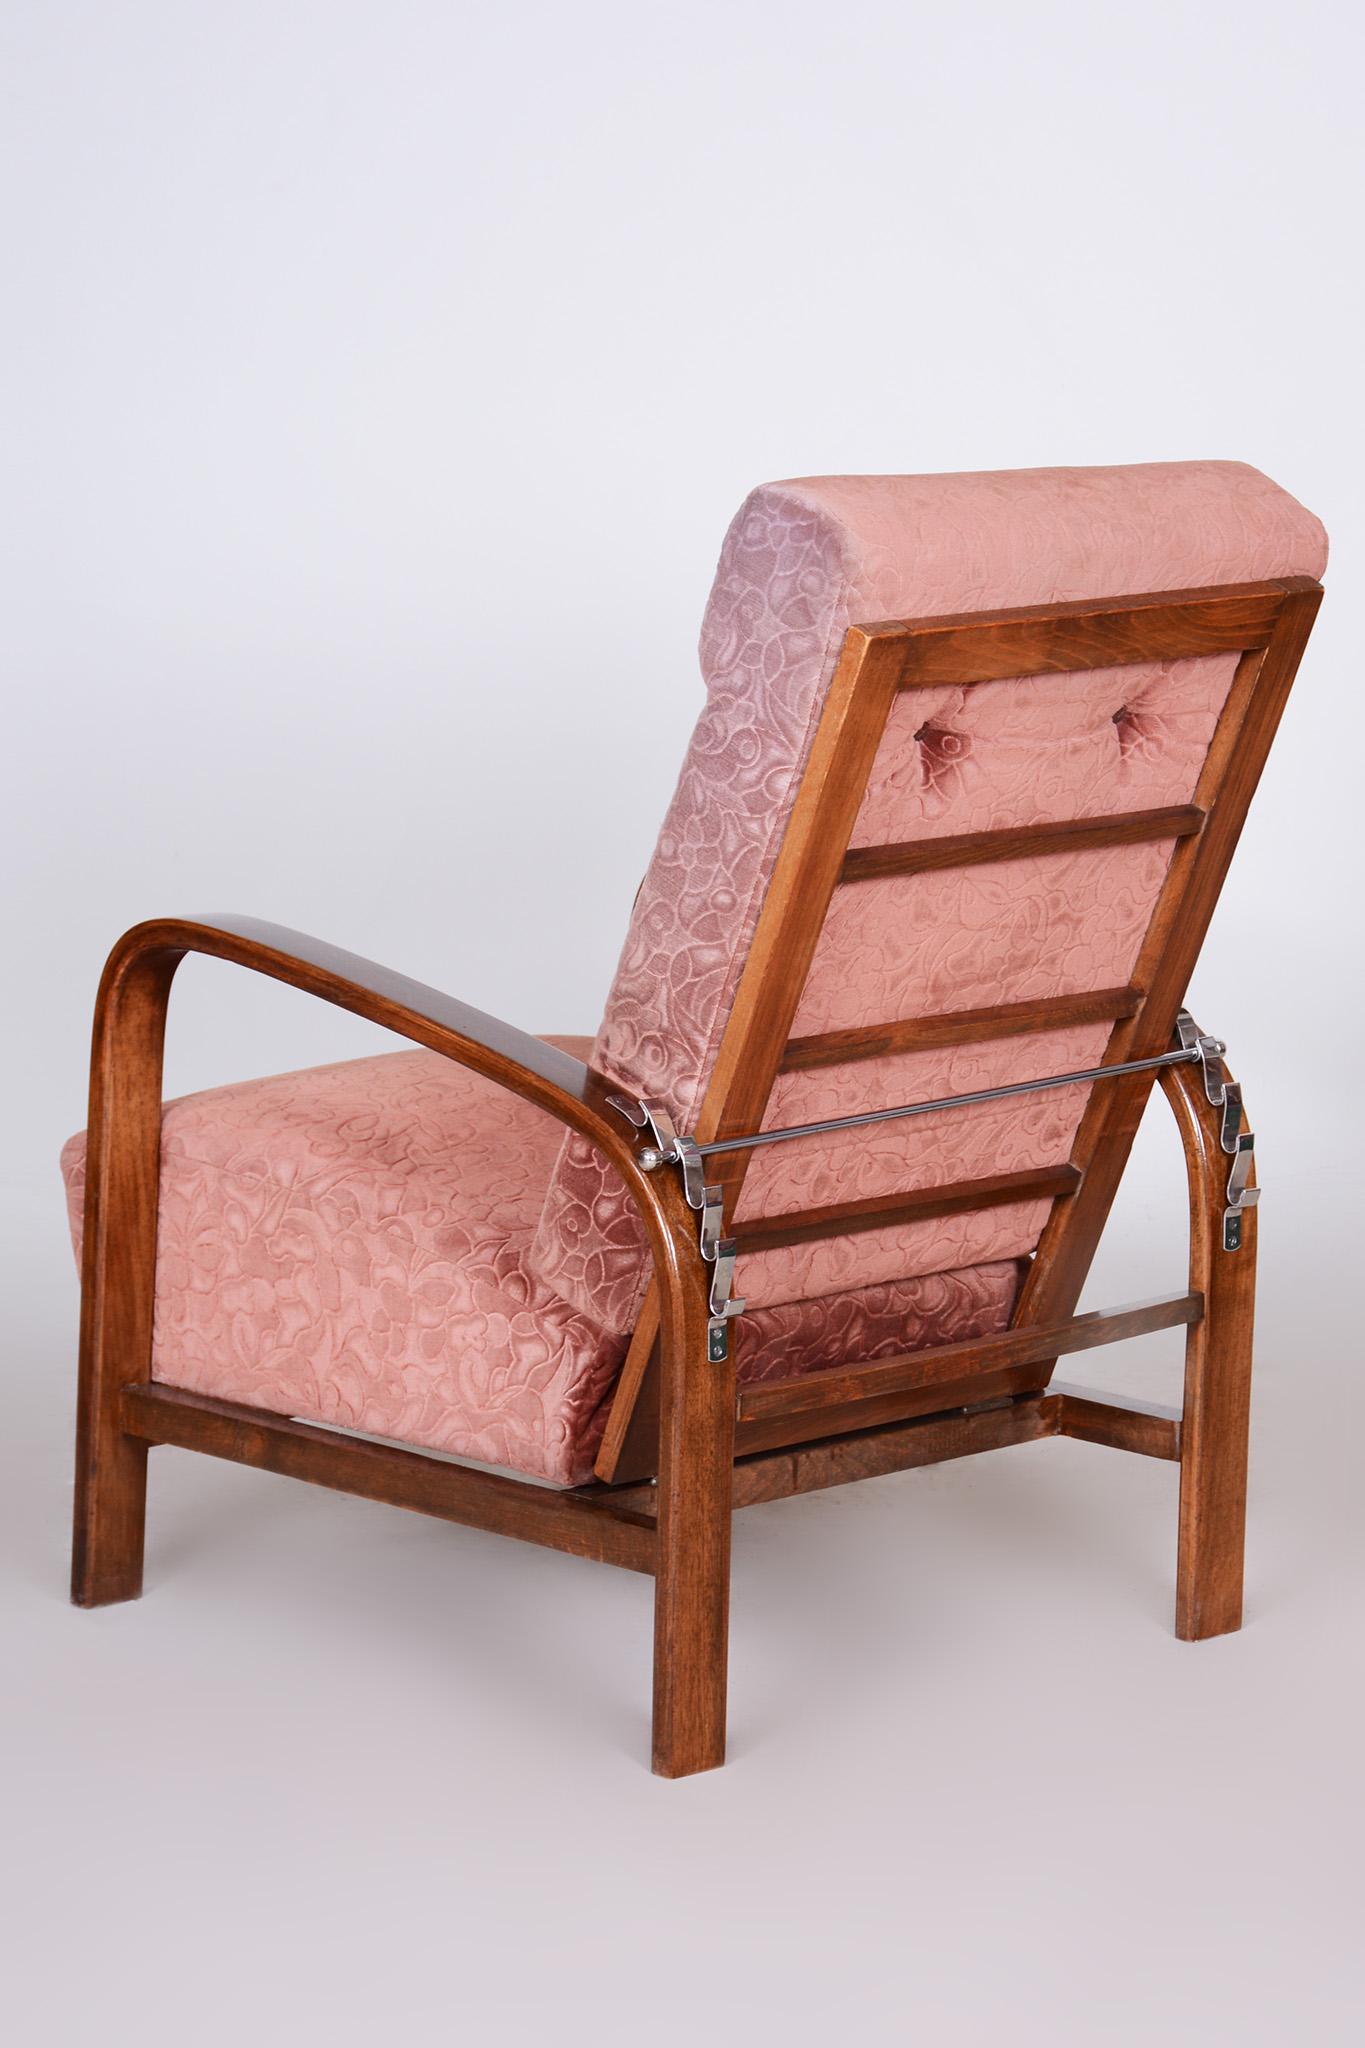 Restored Art Deco Positioning Armchair, Beech Solid Wood, Walnut, 1930s, Czechia For Sale 3